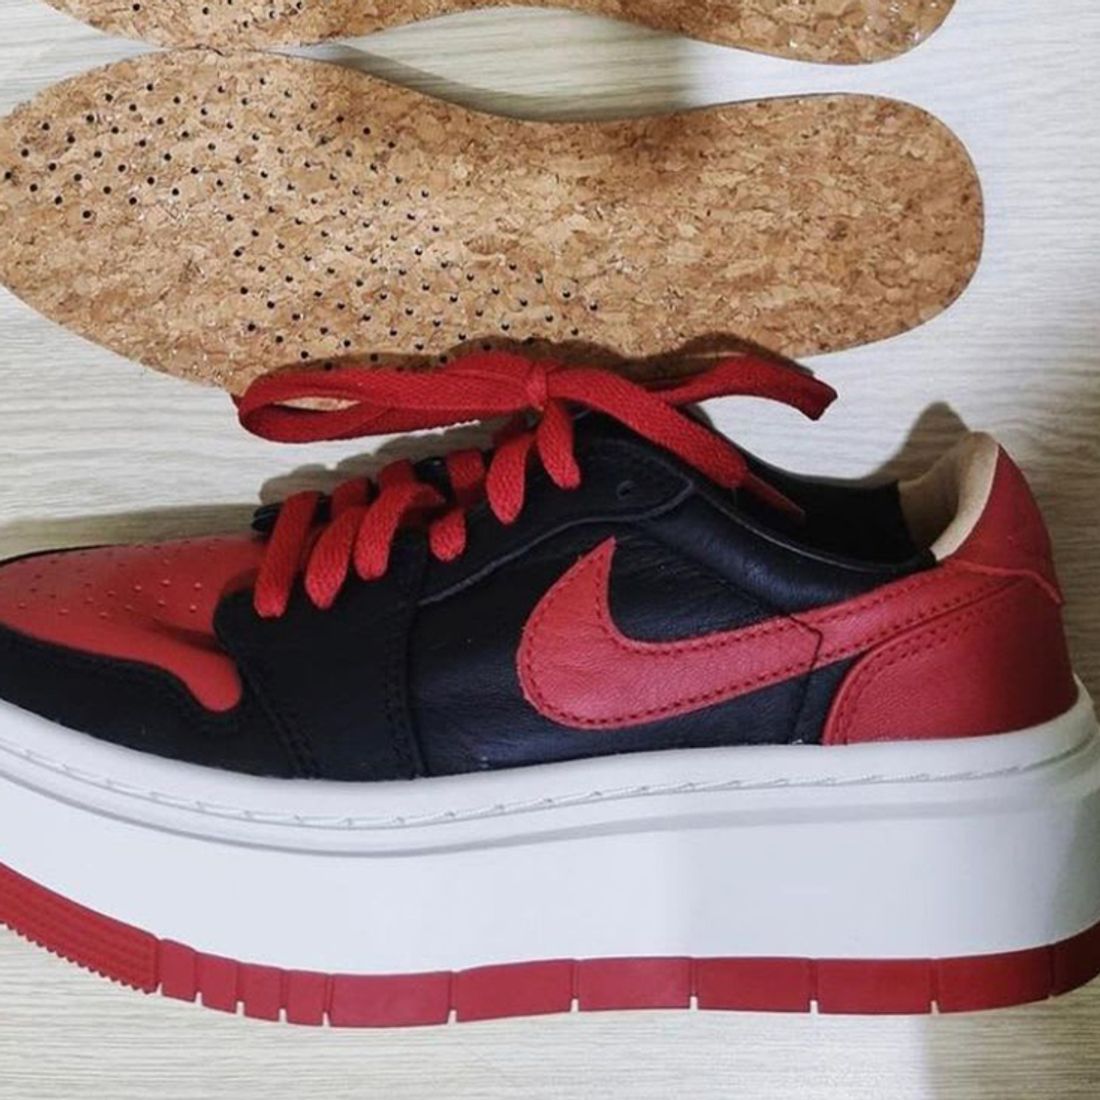 Leaked! The Air Jordan 1 Low Gets a Platform Sole - Sneaker Freaker